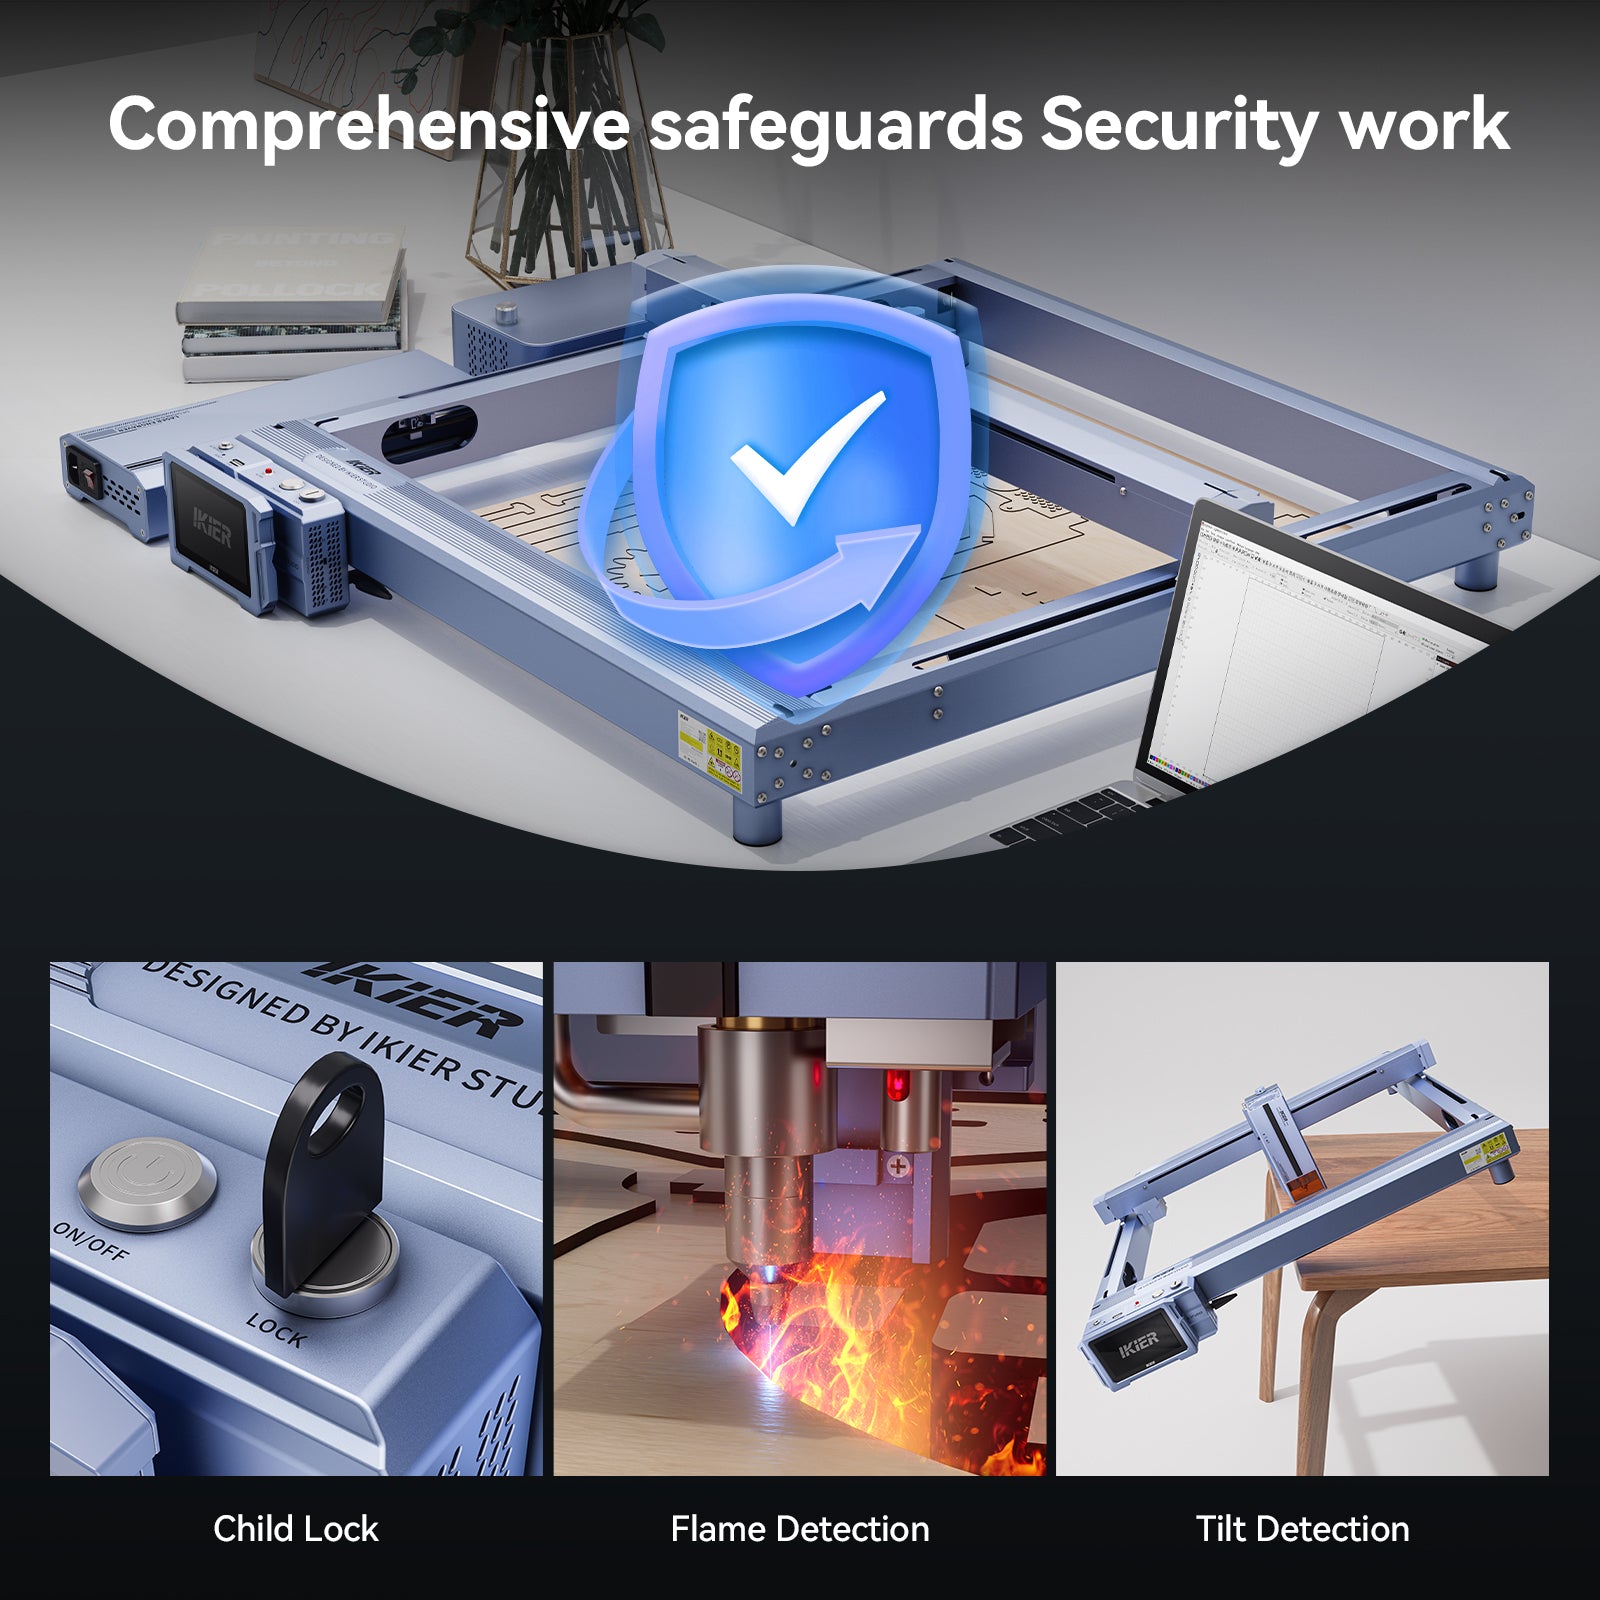 Comprehensive safeguards security work